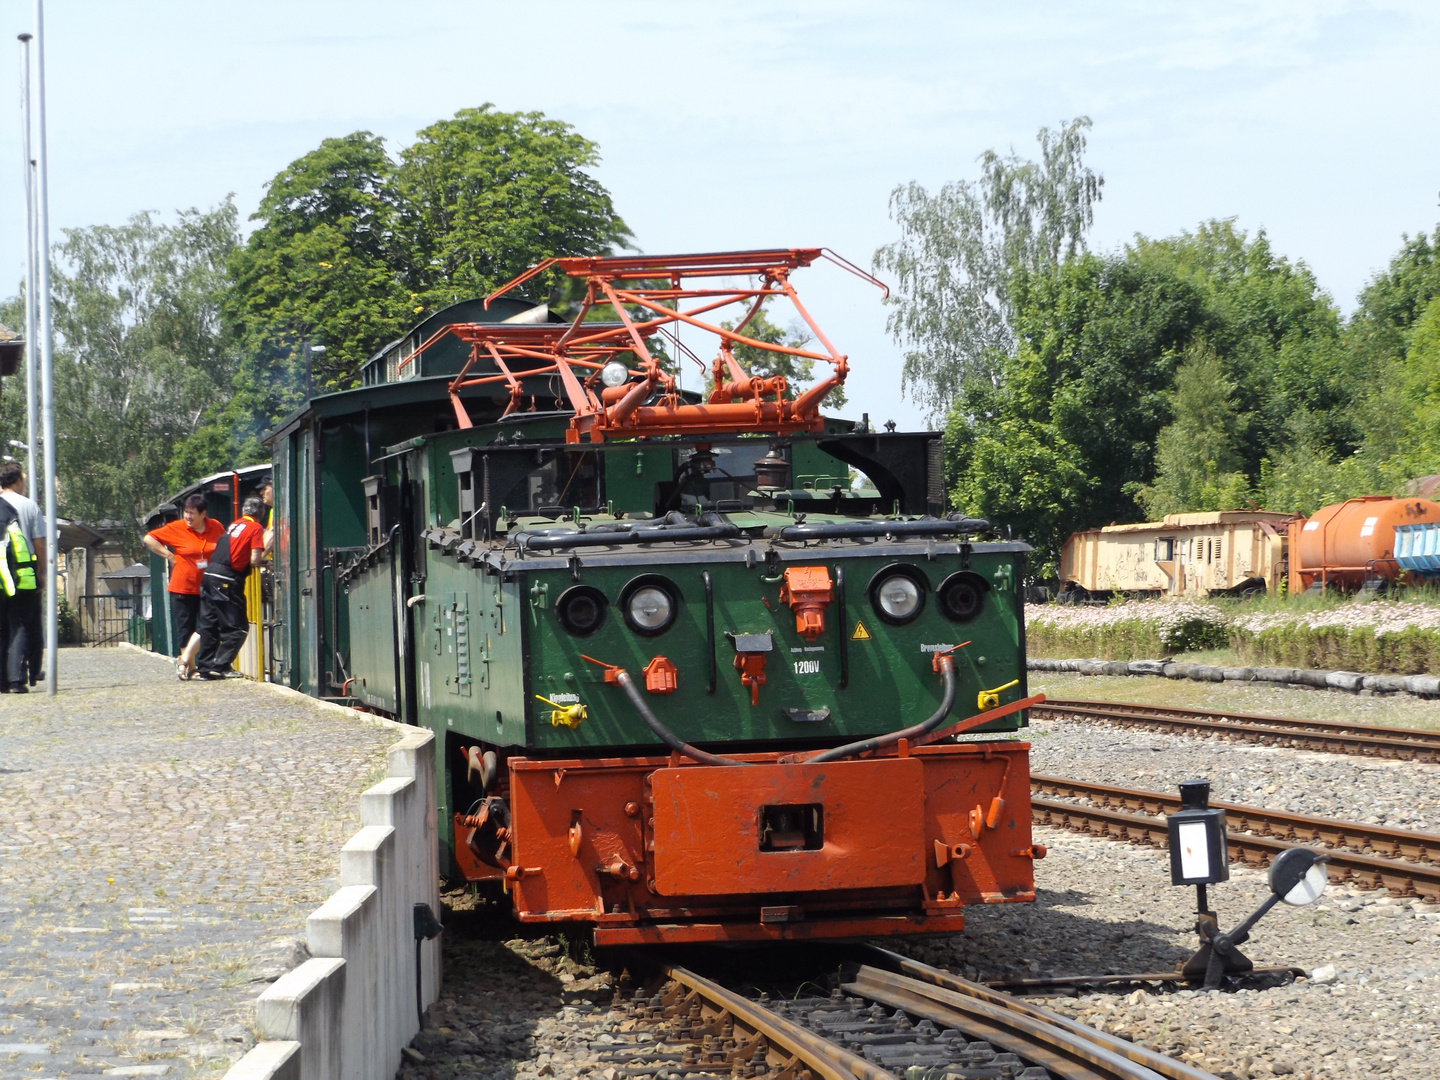 Grubenbahn in Meuselwitz 1